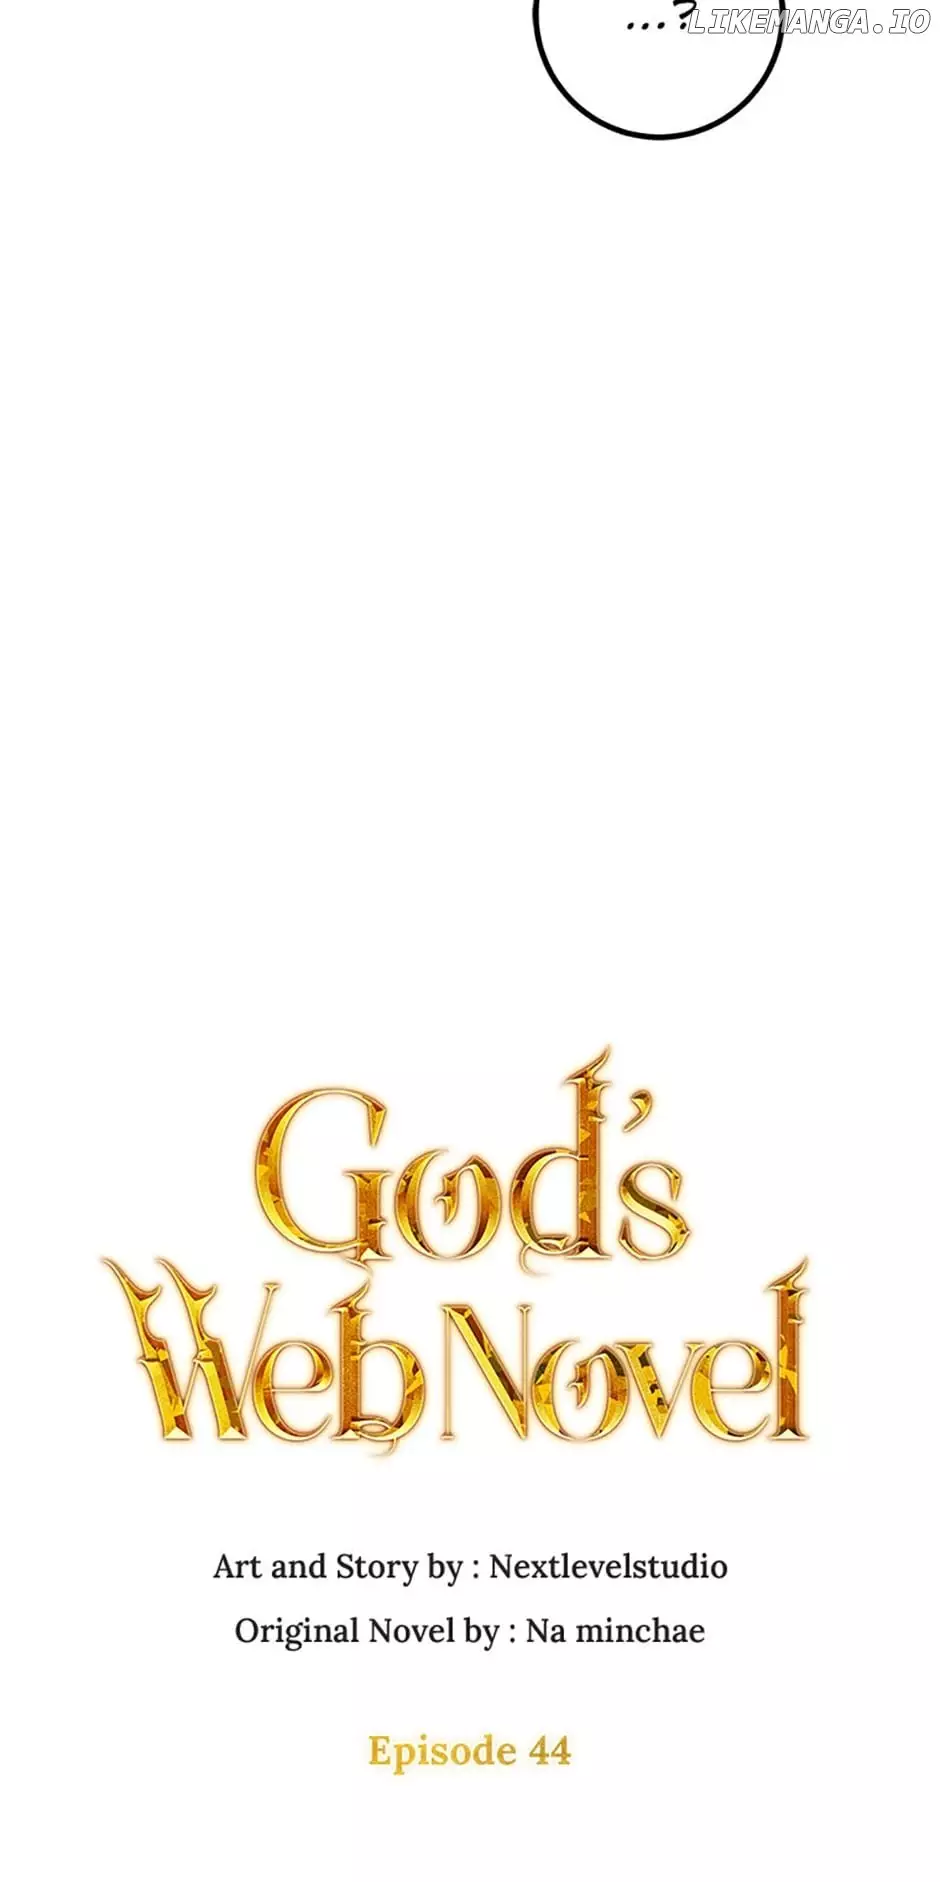 God's Webnovel - 44 page 24-91dc6caa